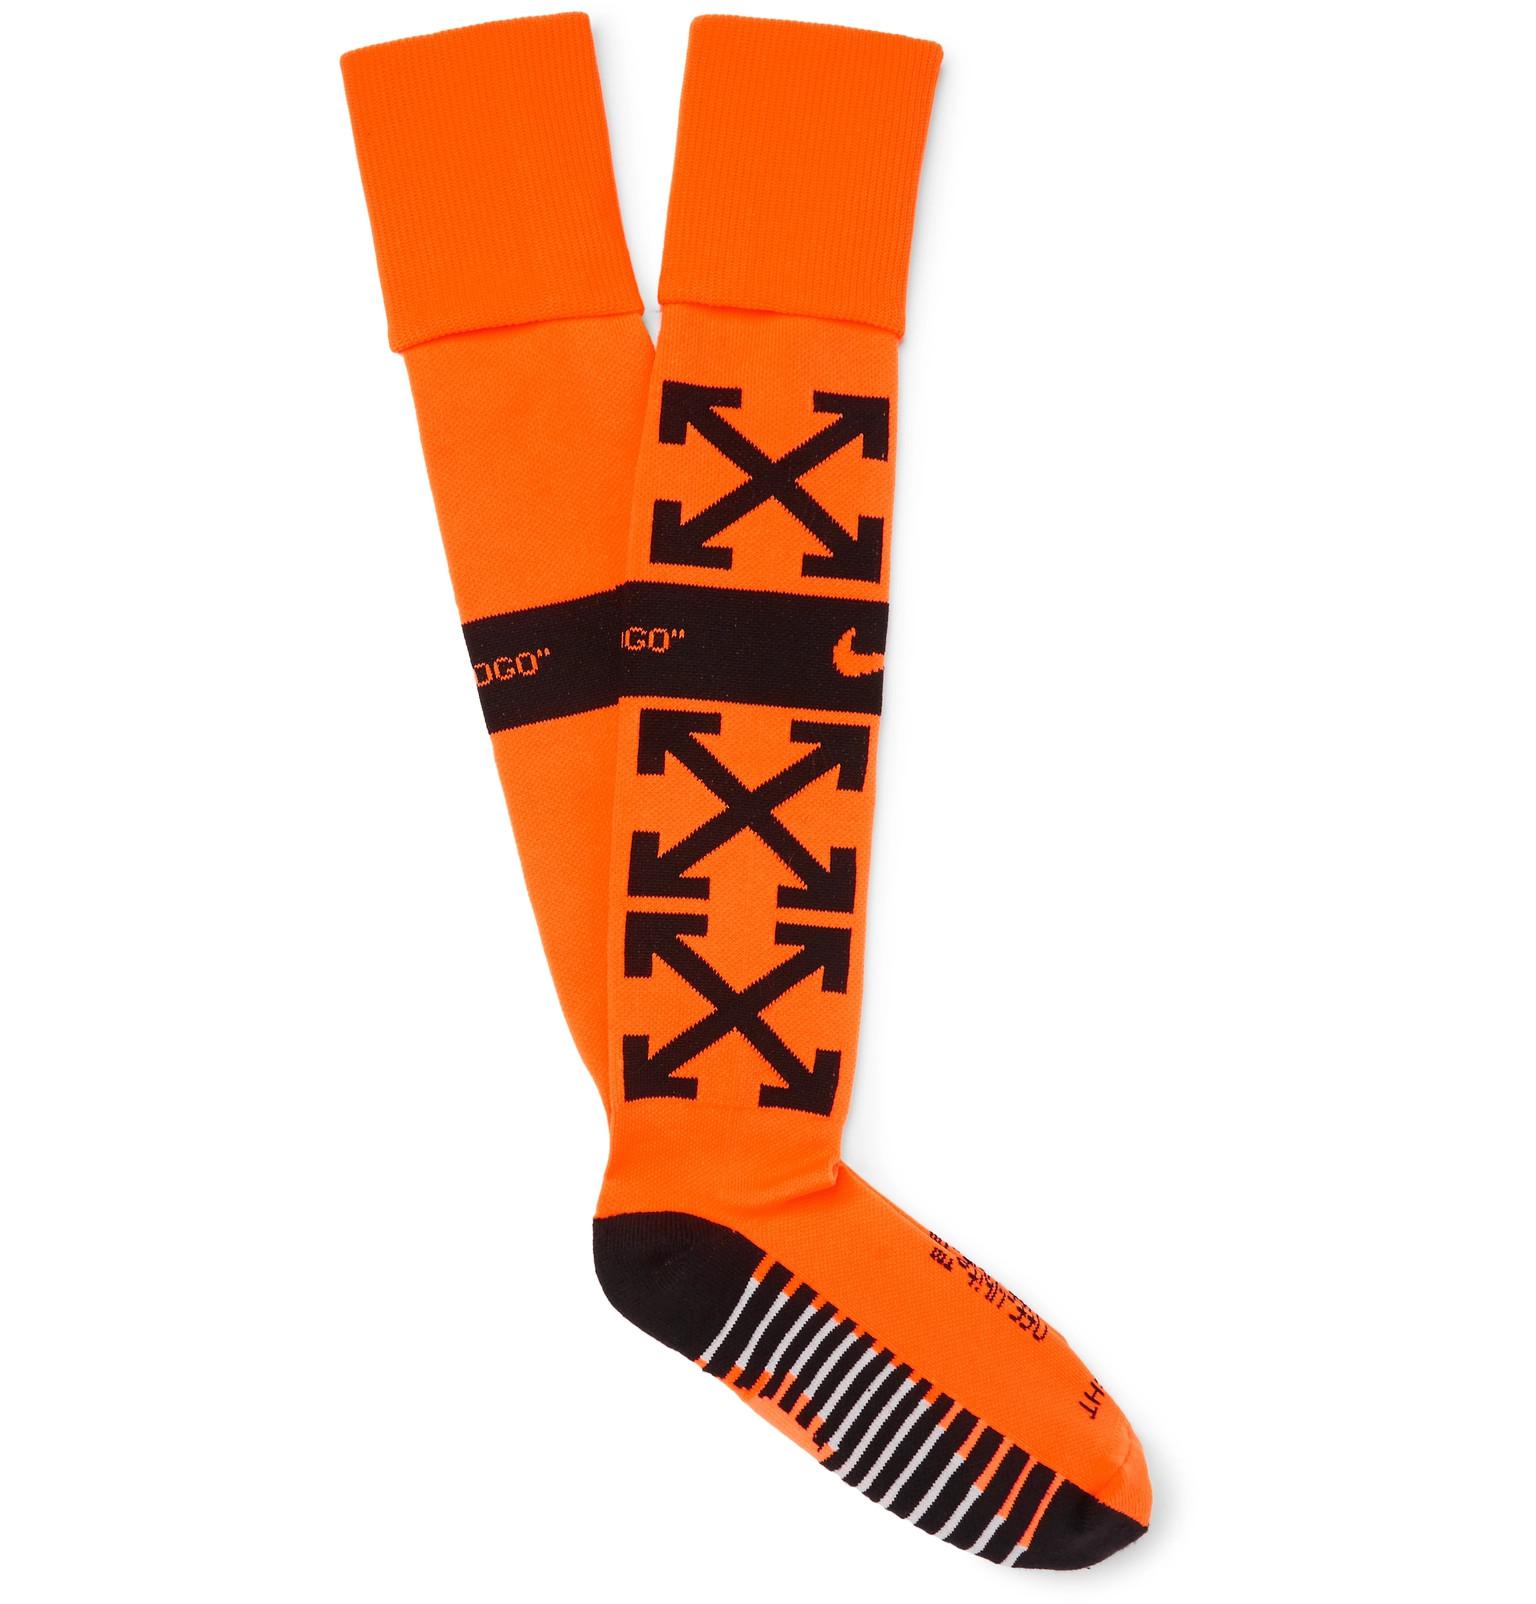 nike orange socks